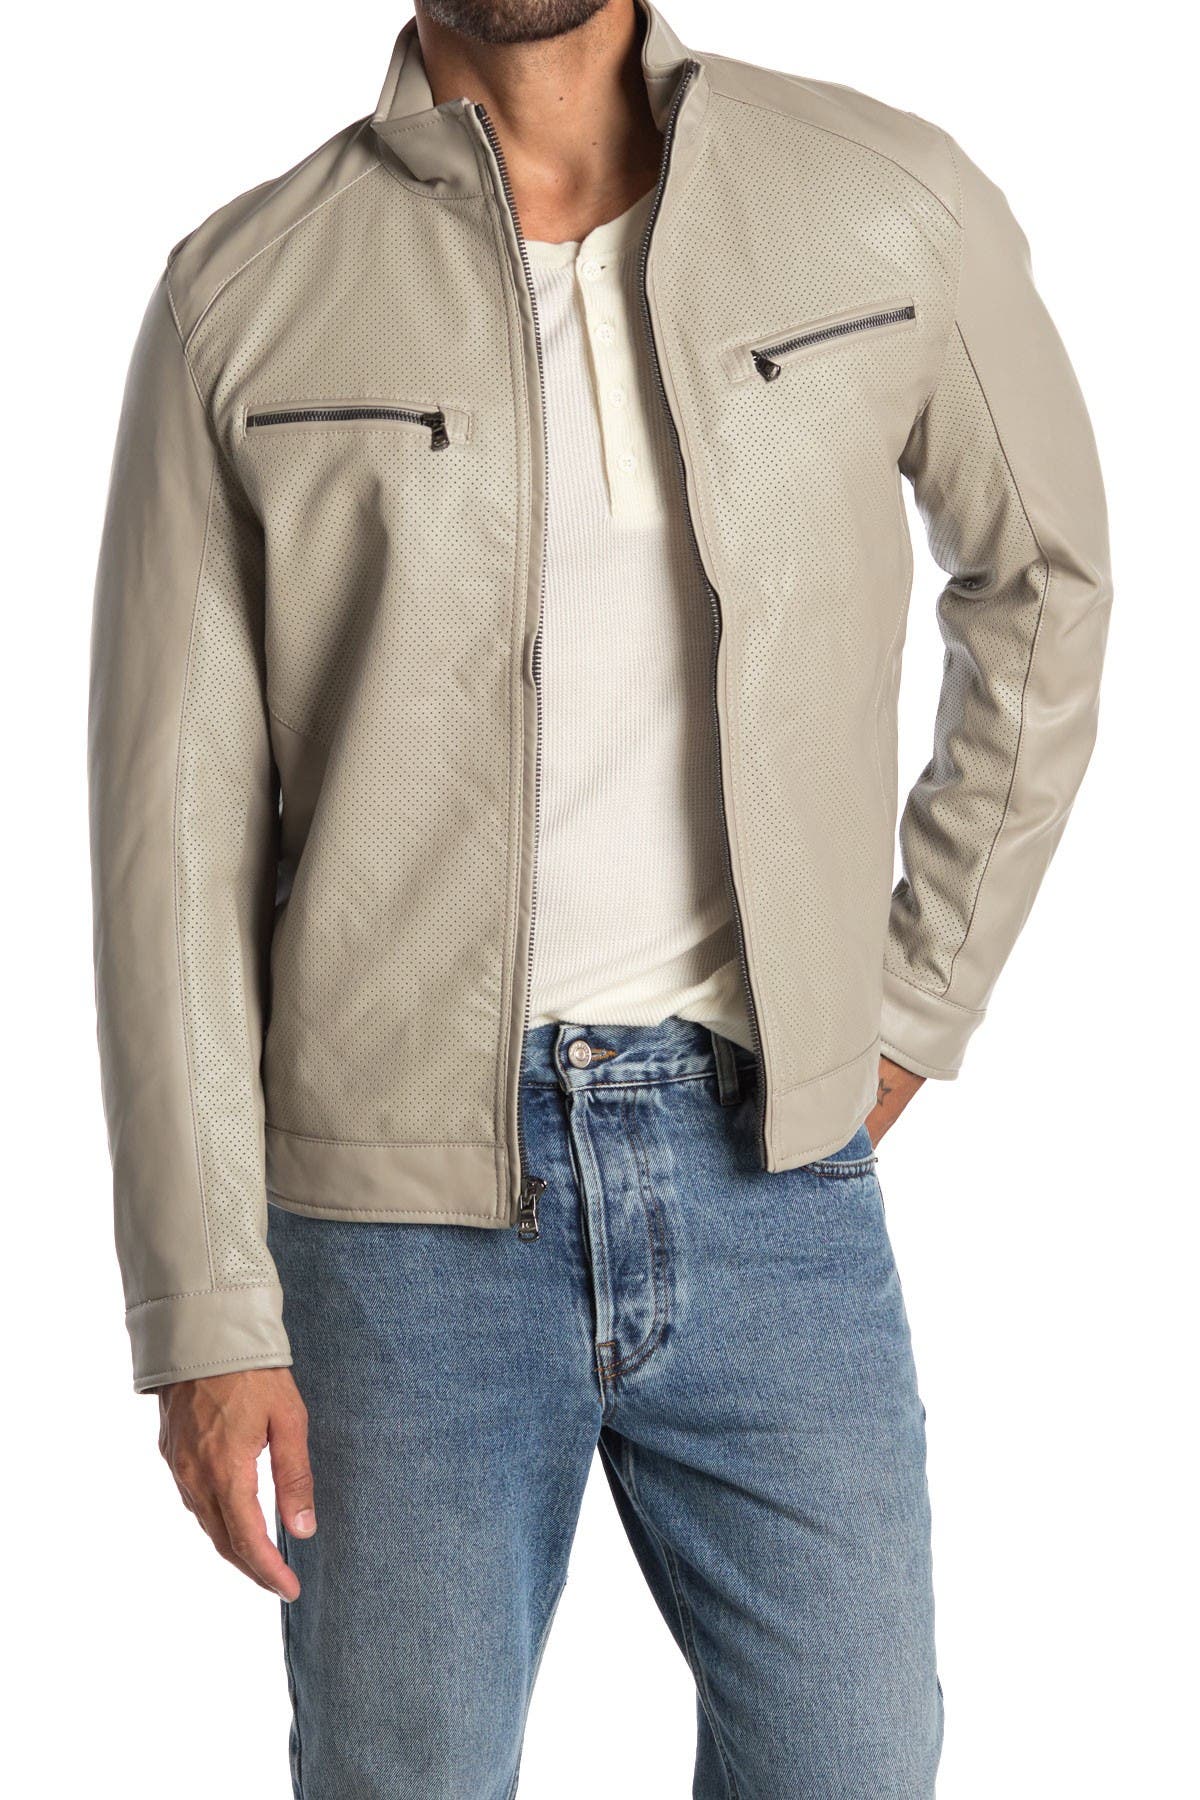 michael kors leather jacket nordstrom rack